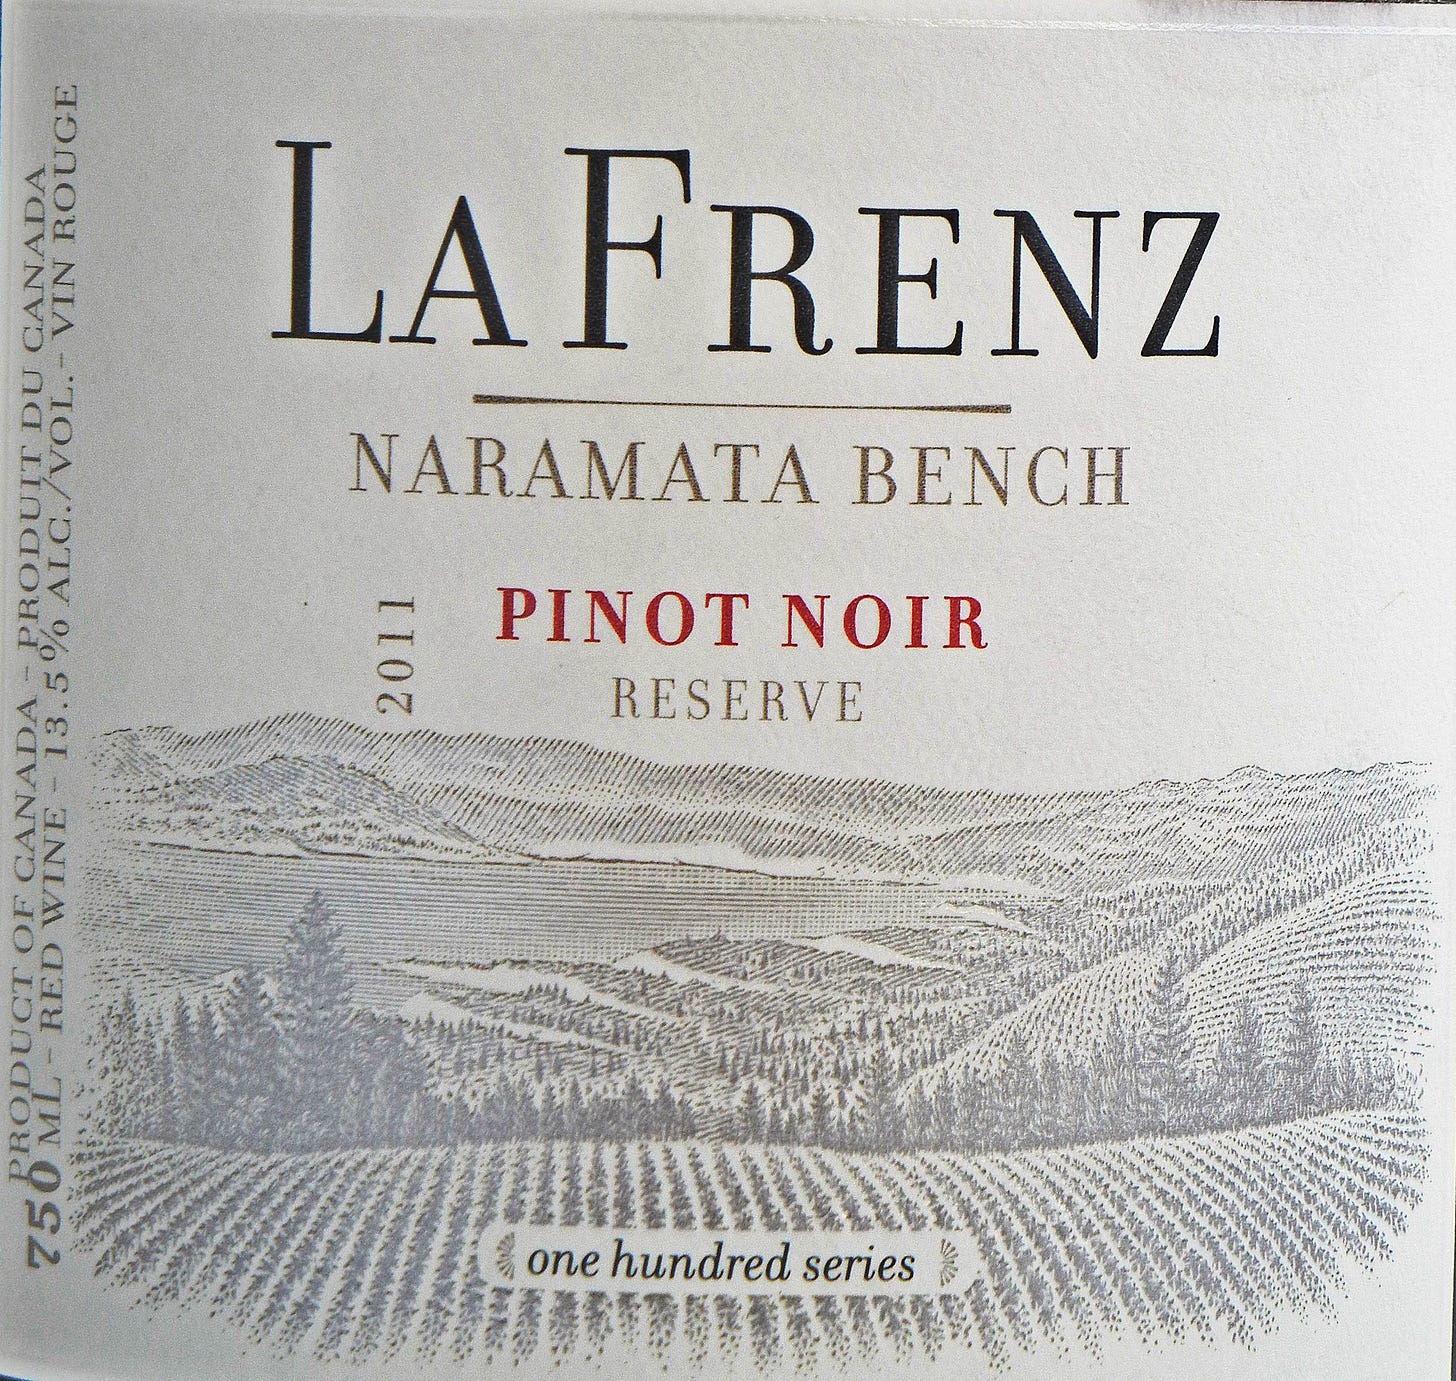 La Frenz Reserve Pinot Noir 2011 Label - BC Pinot Noir Tasting Review 17